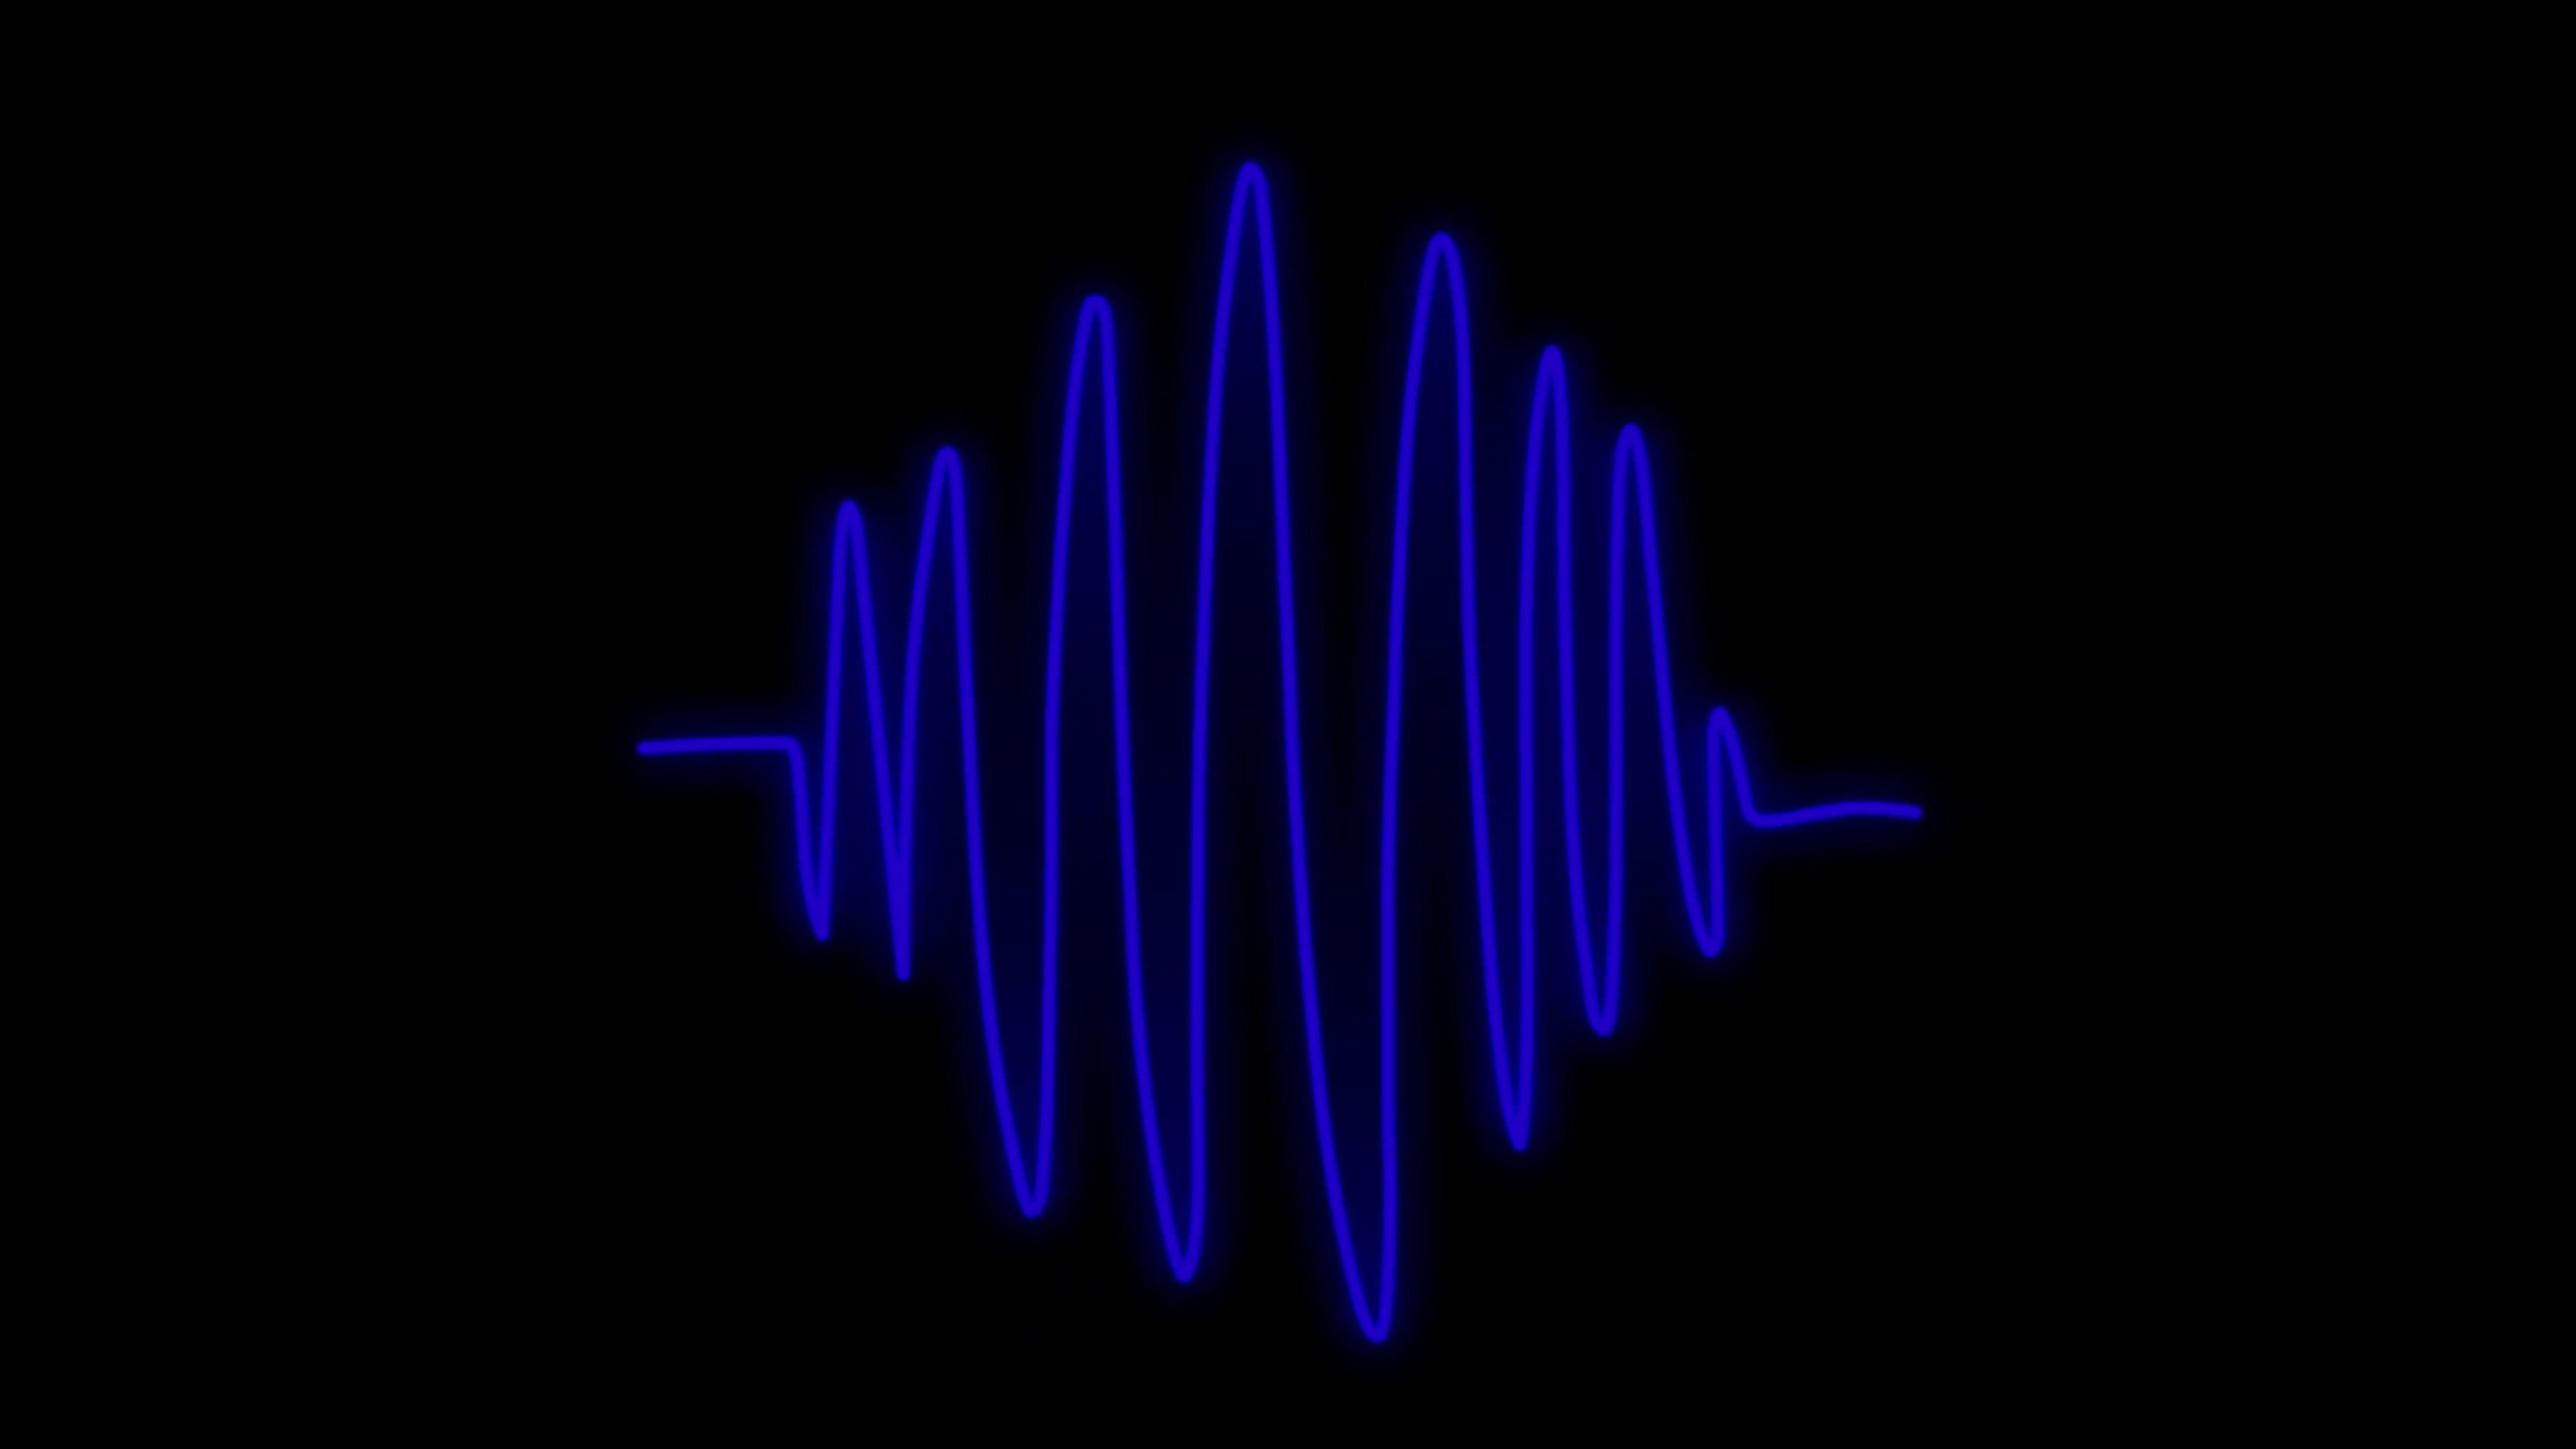 frugter Antagelse varsel Animation blue neon light sound wave effect on black background. 7650826  Stock Video at Vecteezy